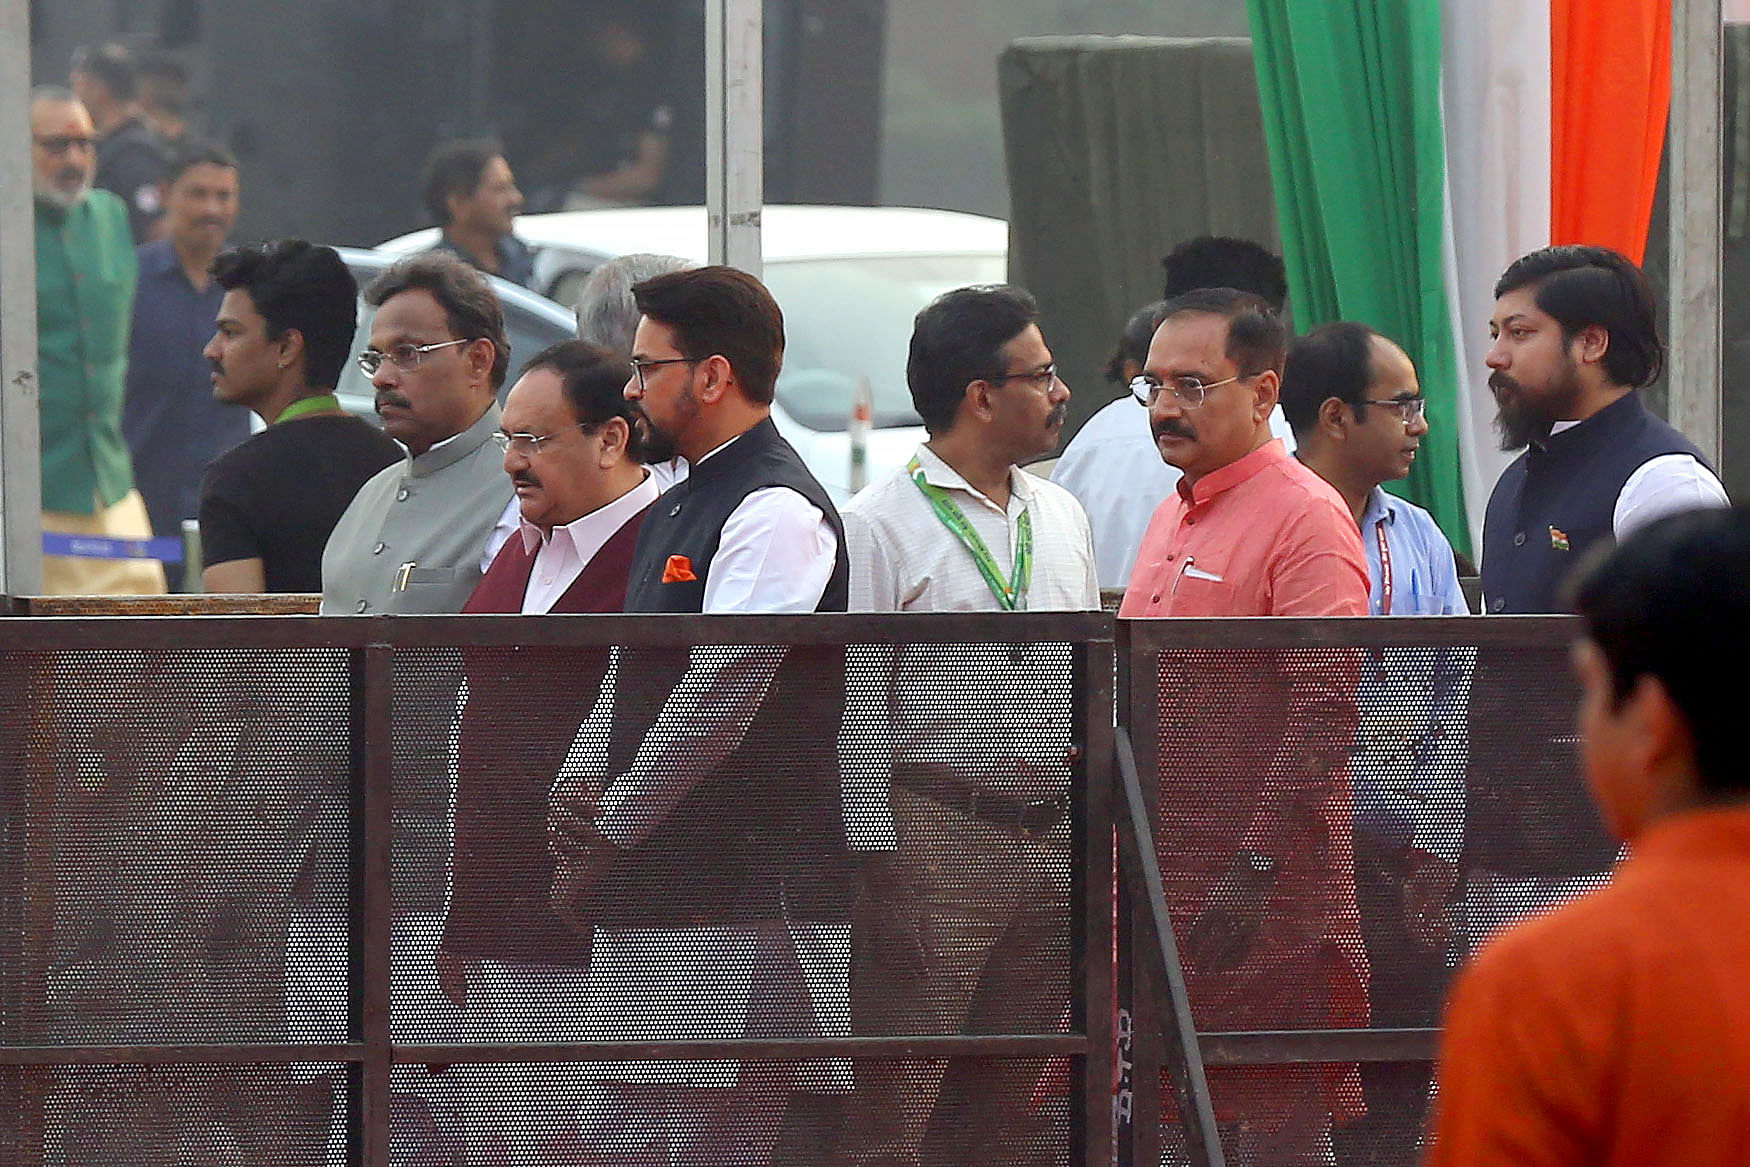 BJP president J.P. Nadda and Union minister Anurag Thakur arrive at the event in New Delhi | Photo: Suraj Singh Bisht | ThePrint